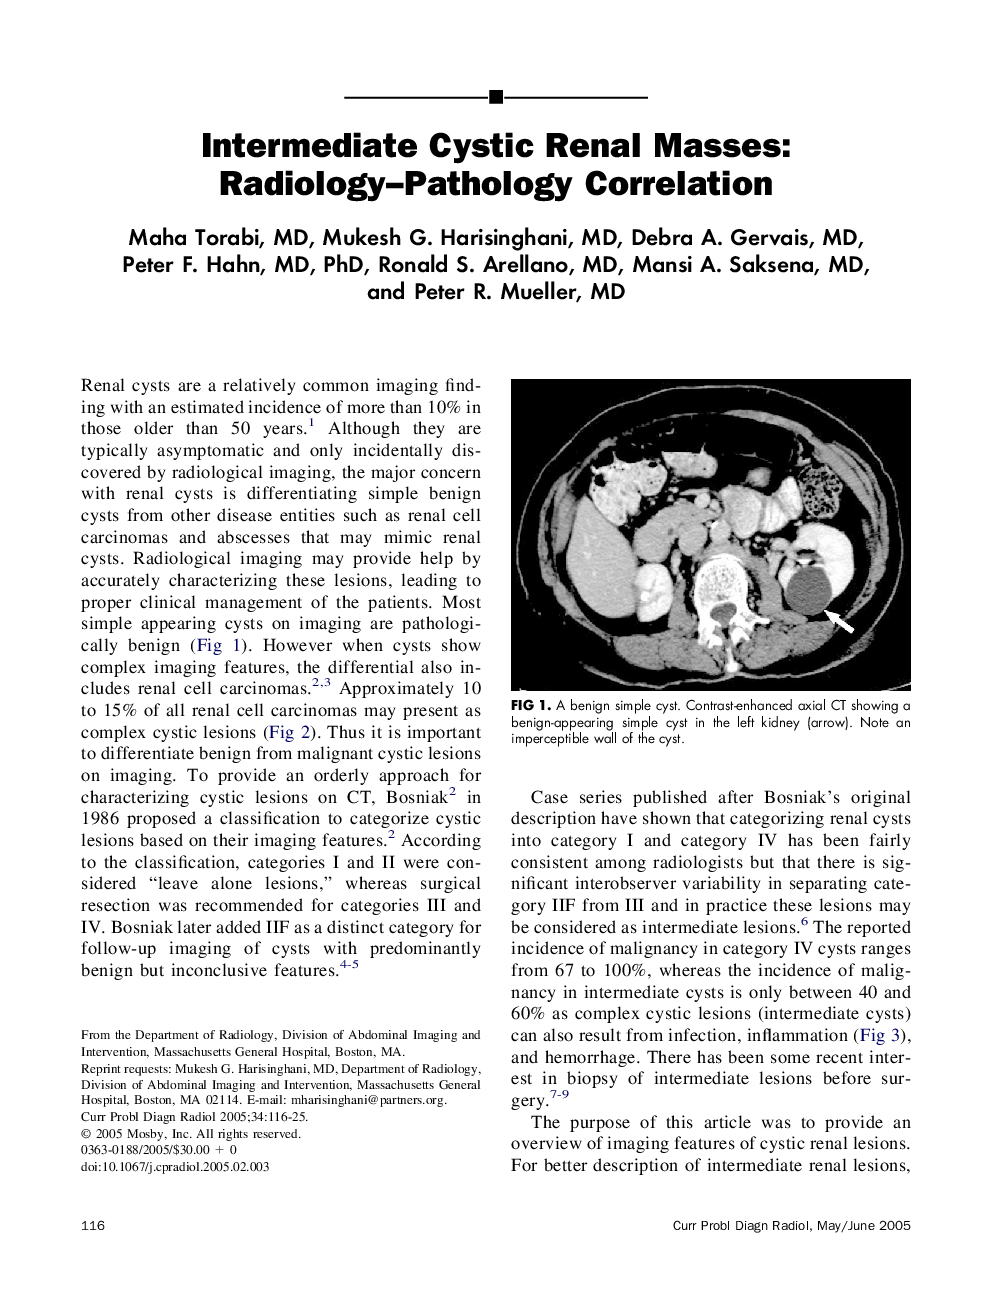 Intermediate Cystic Renal Masses: Radiology-Pathology Correlation